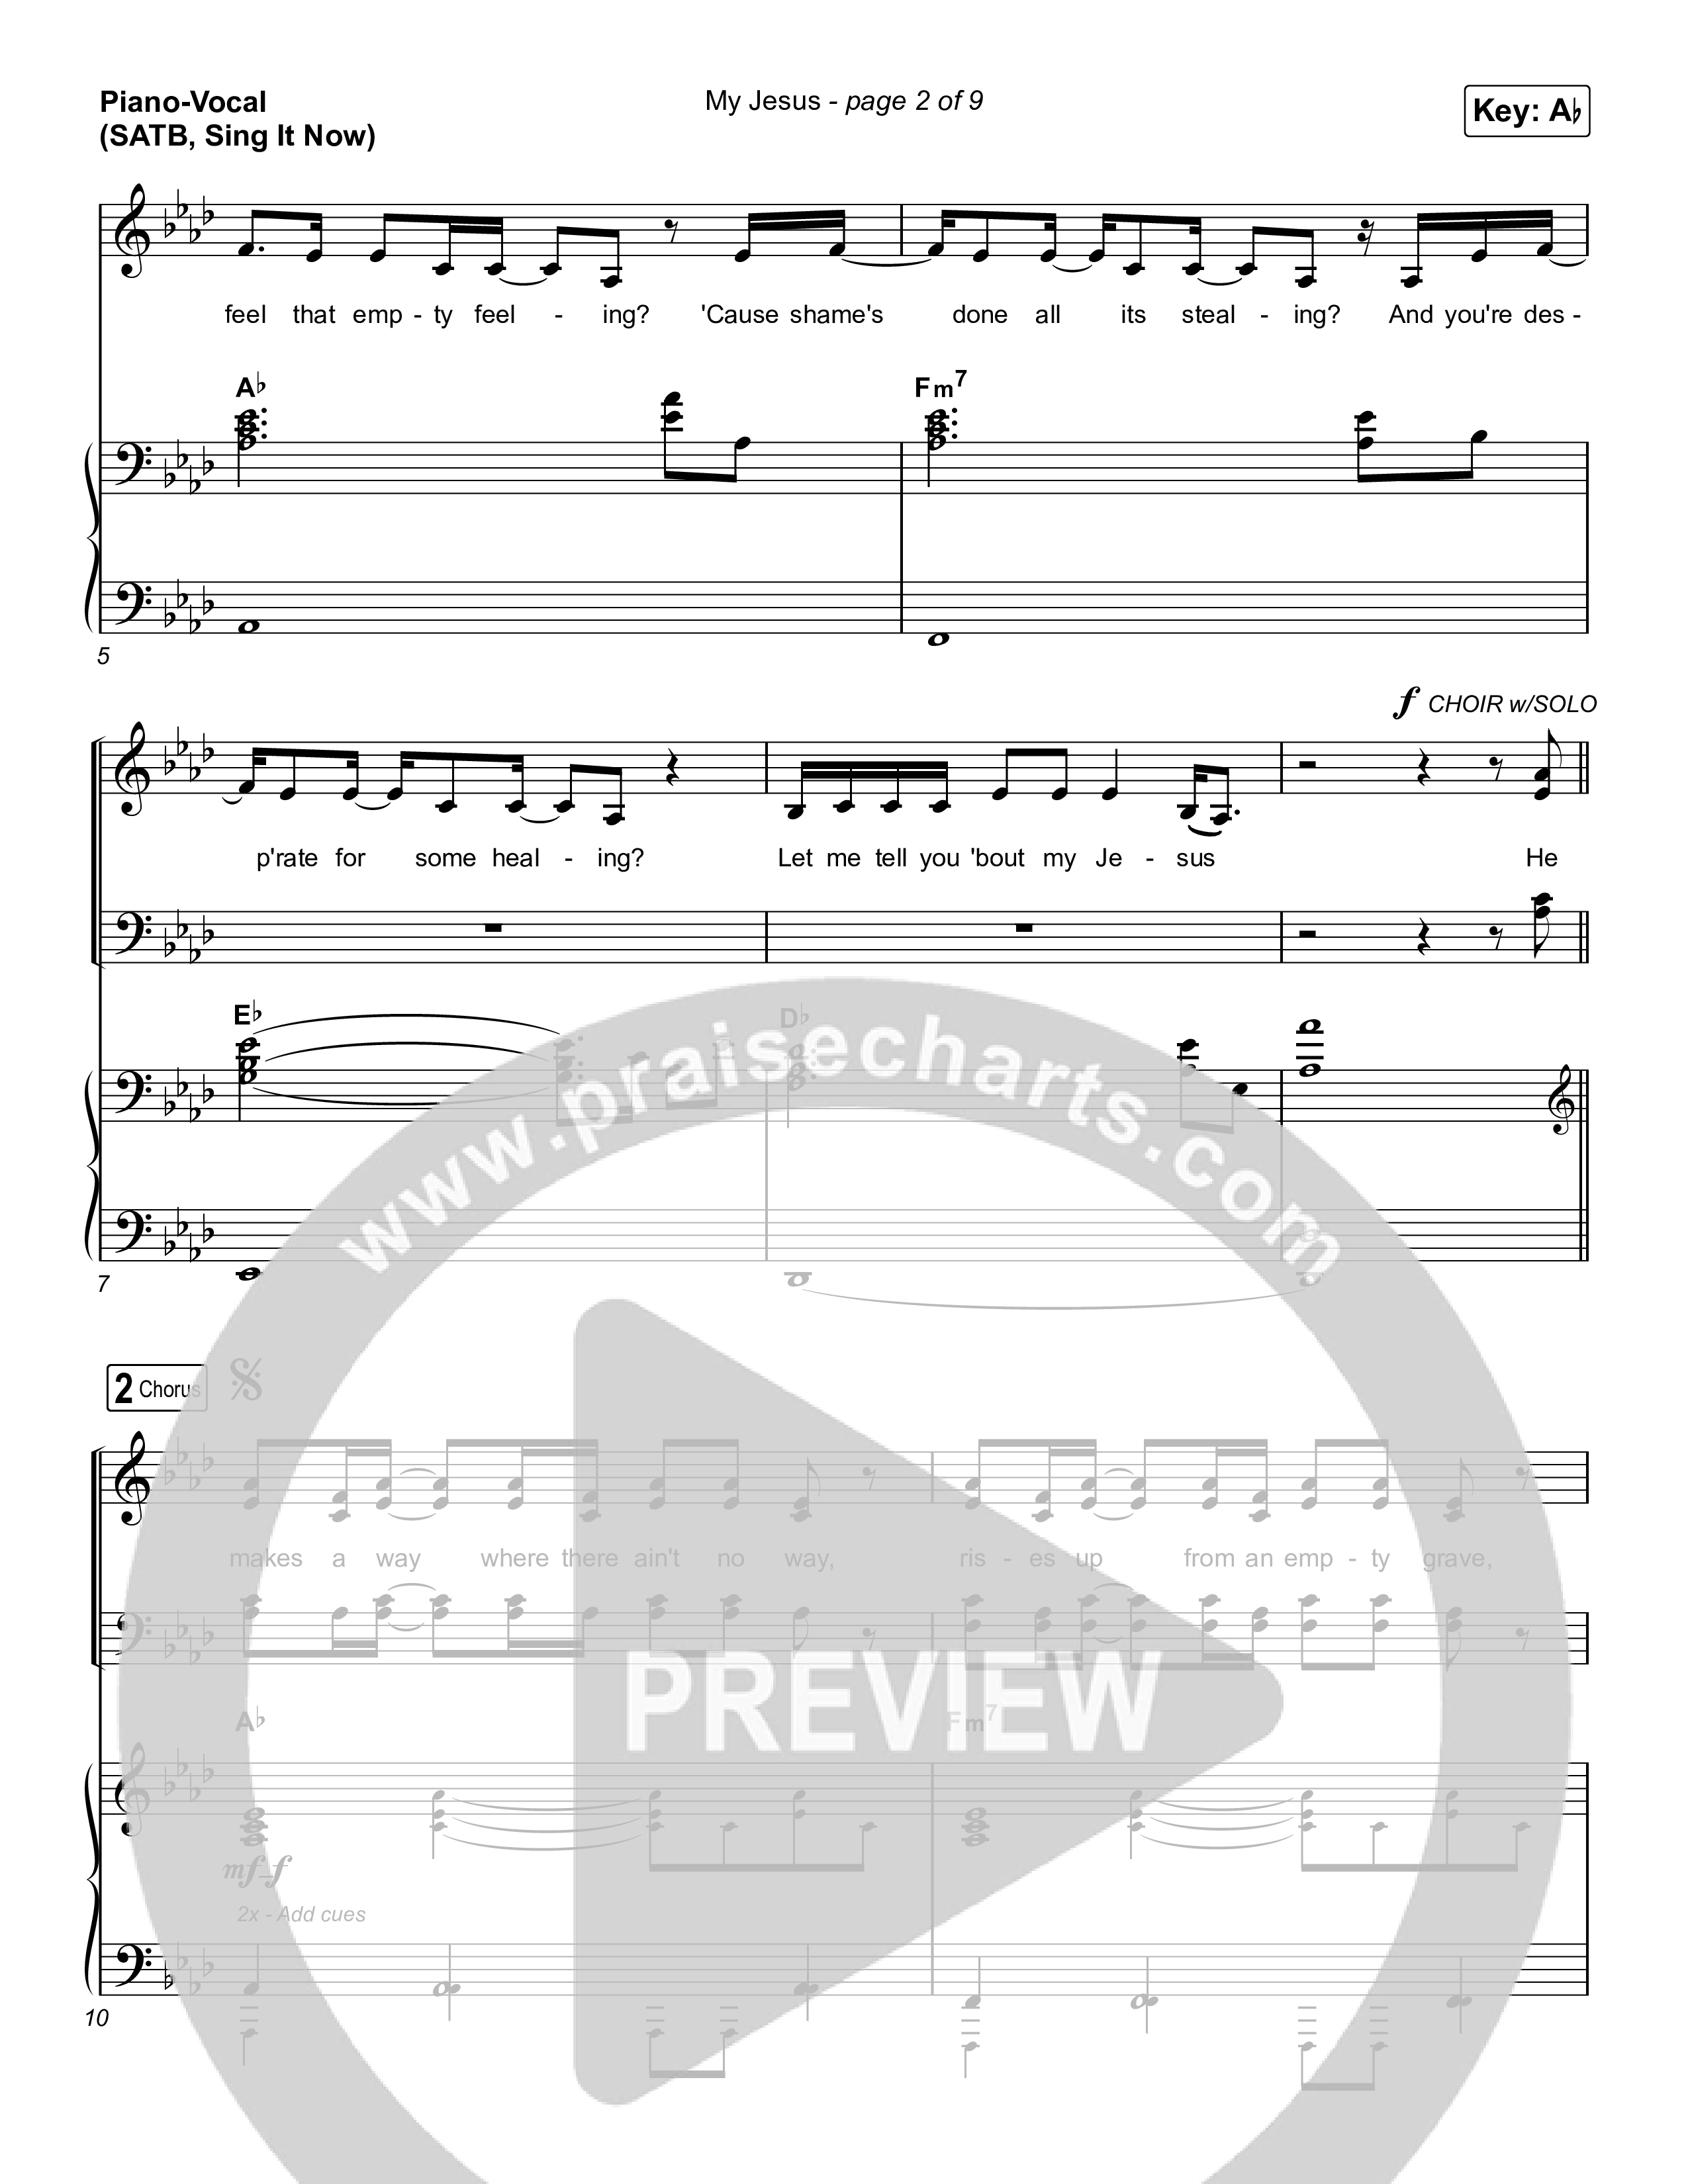 My Jesus (Sing It Now SATB) Piano/Choir (SATB) (Anne Wilson / Arr. Luke Gambill)